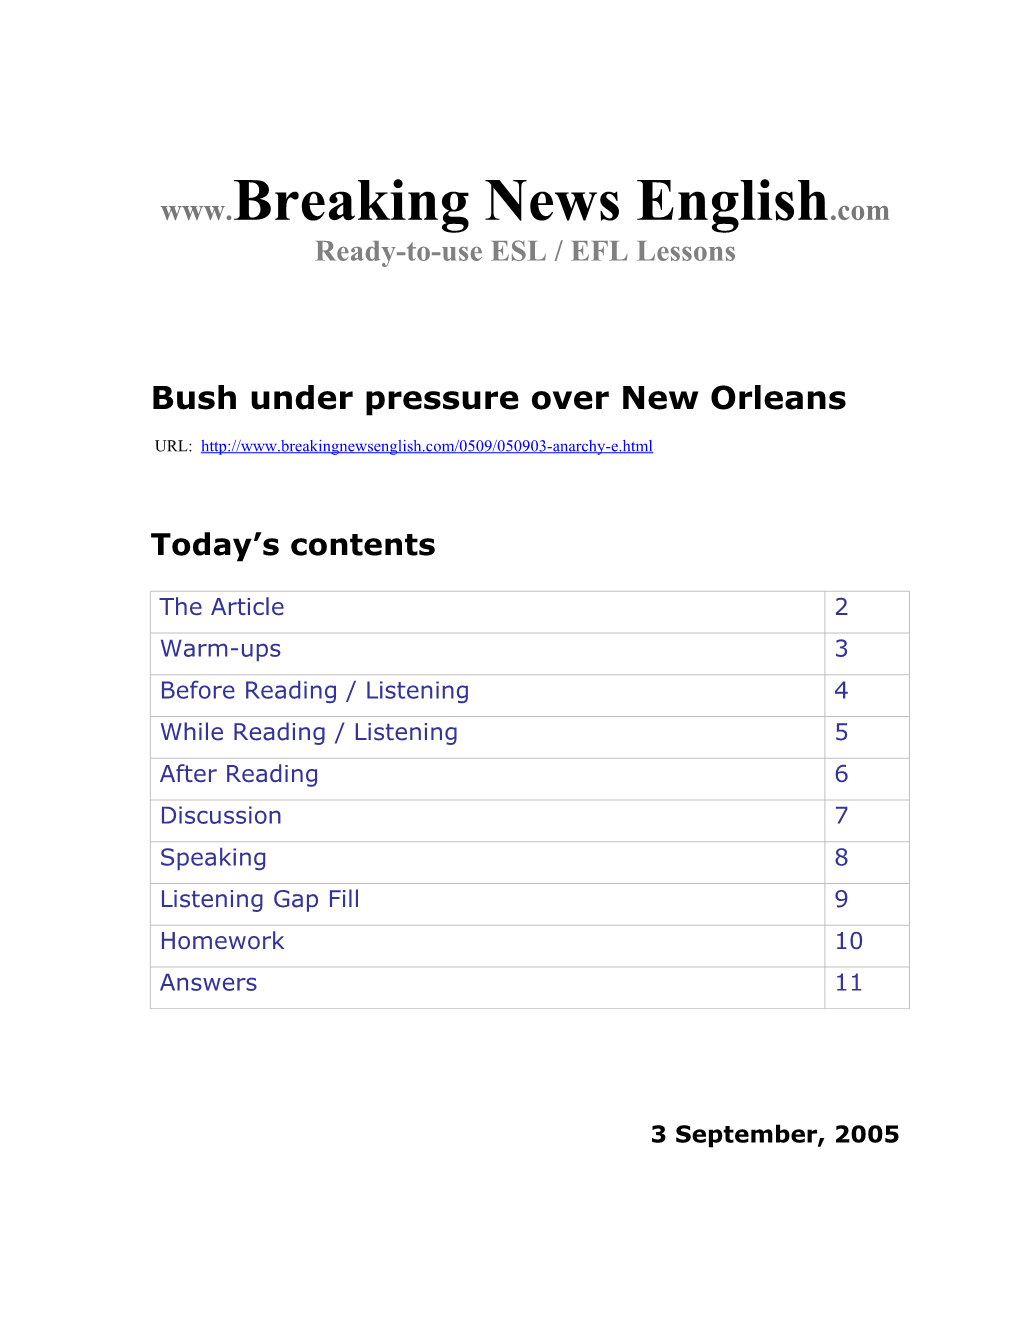 Bush Under Pressure Over New Orleans